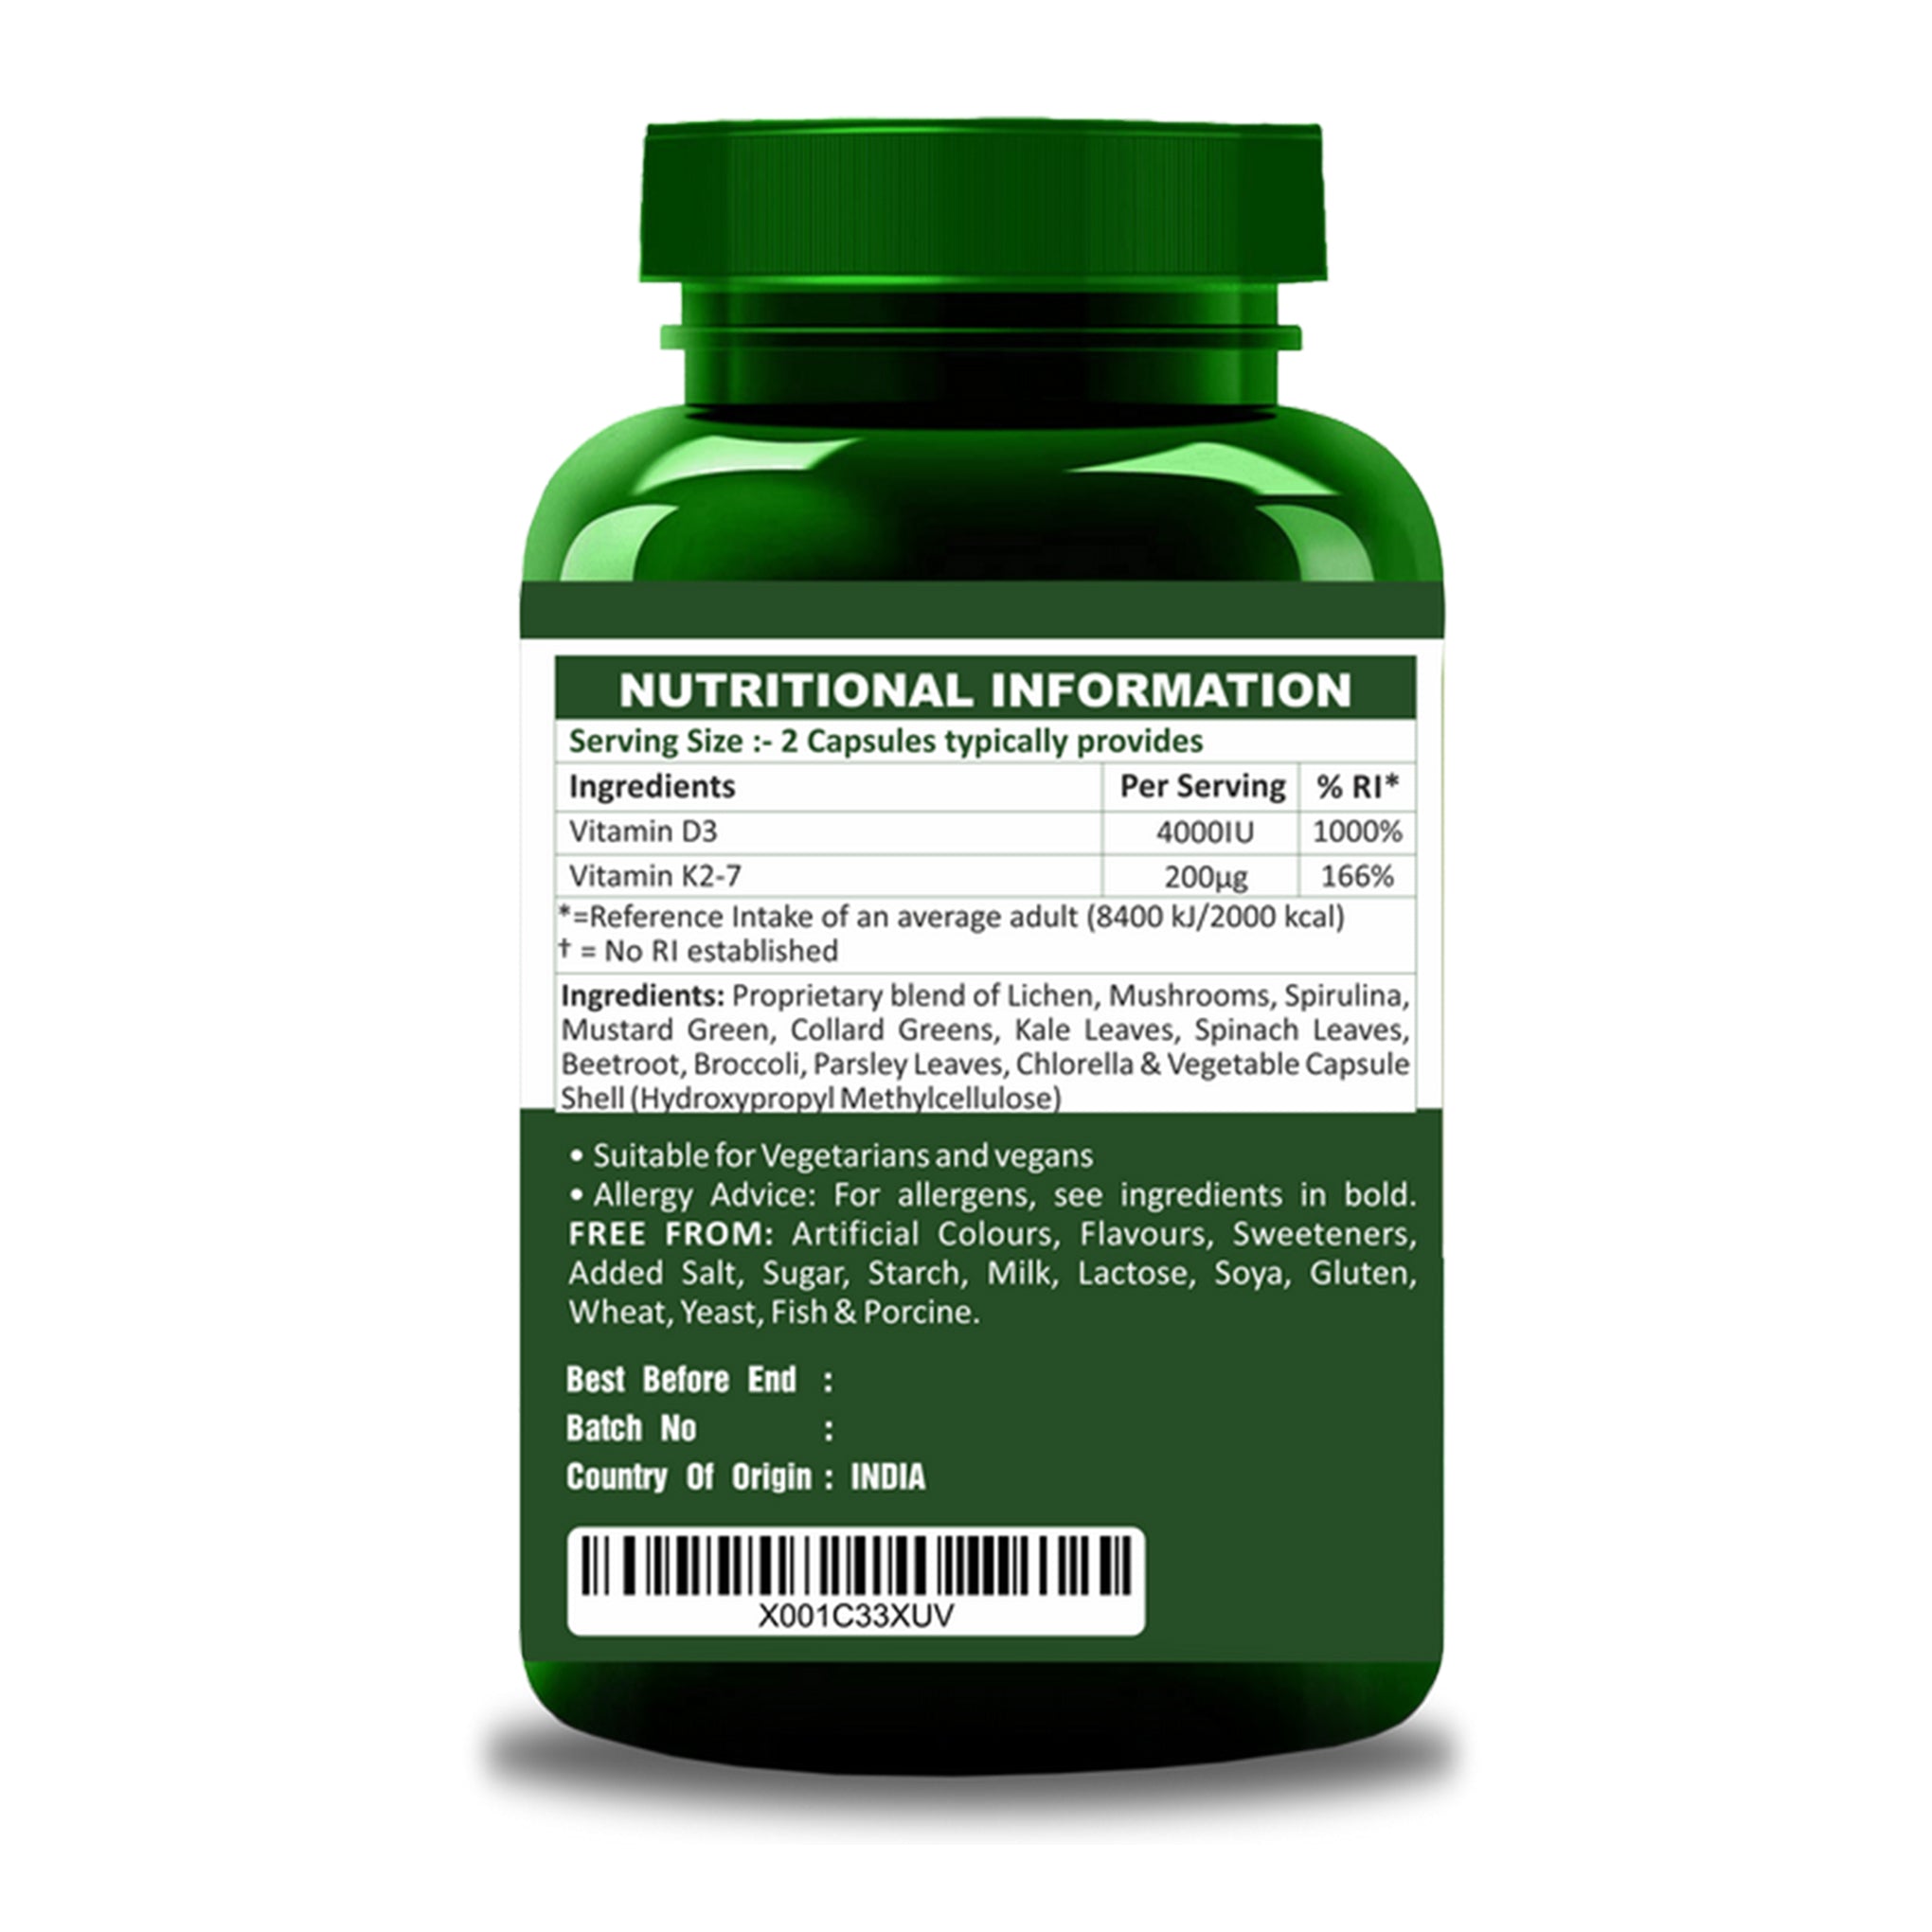 Plant-Based Natural Vitamin D3 and K2 Capsules